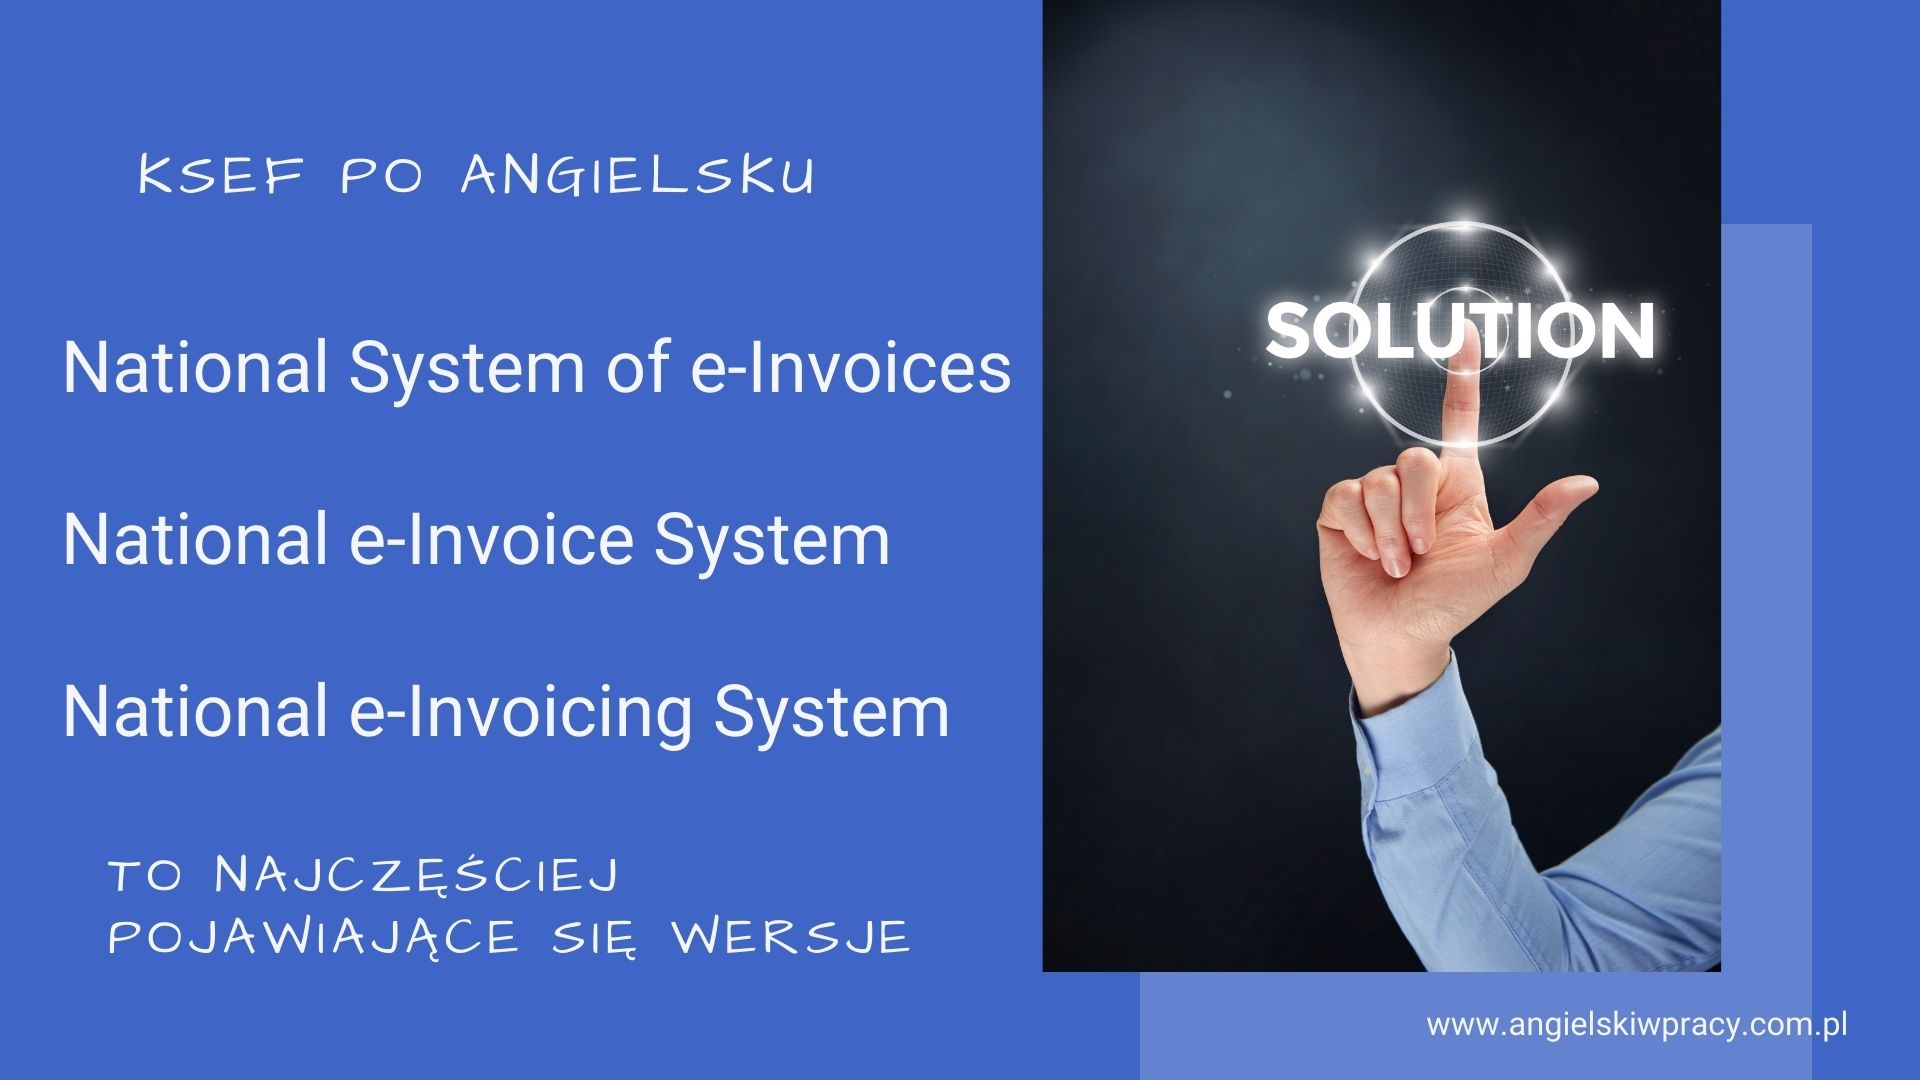 National e-invoice system - names